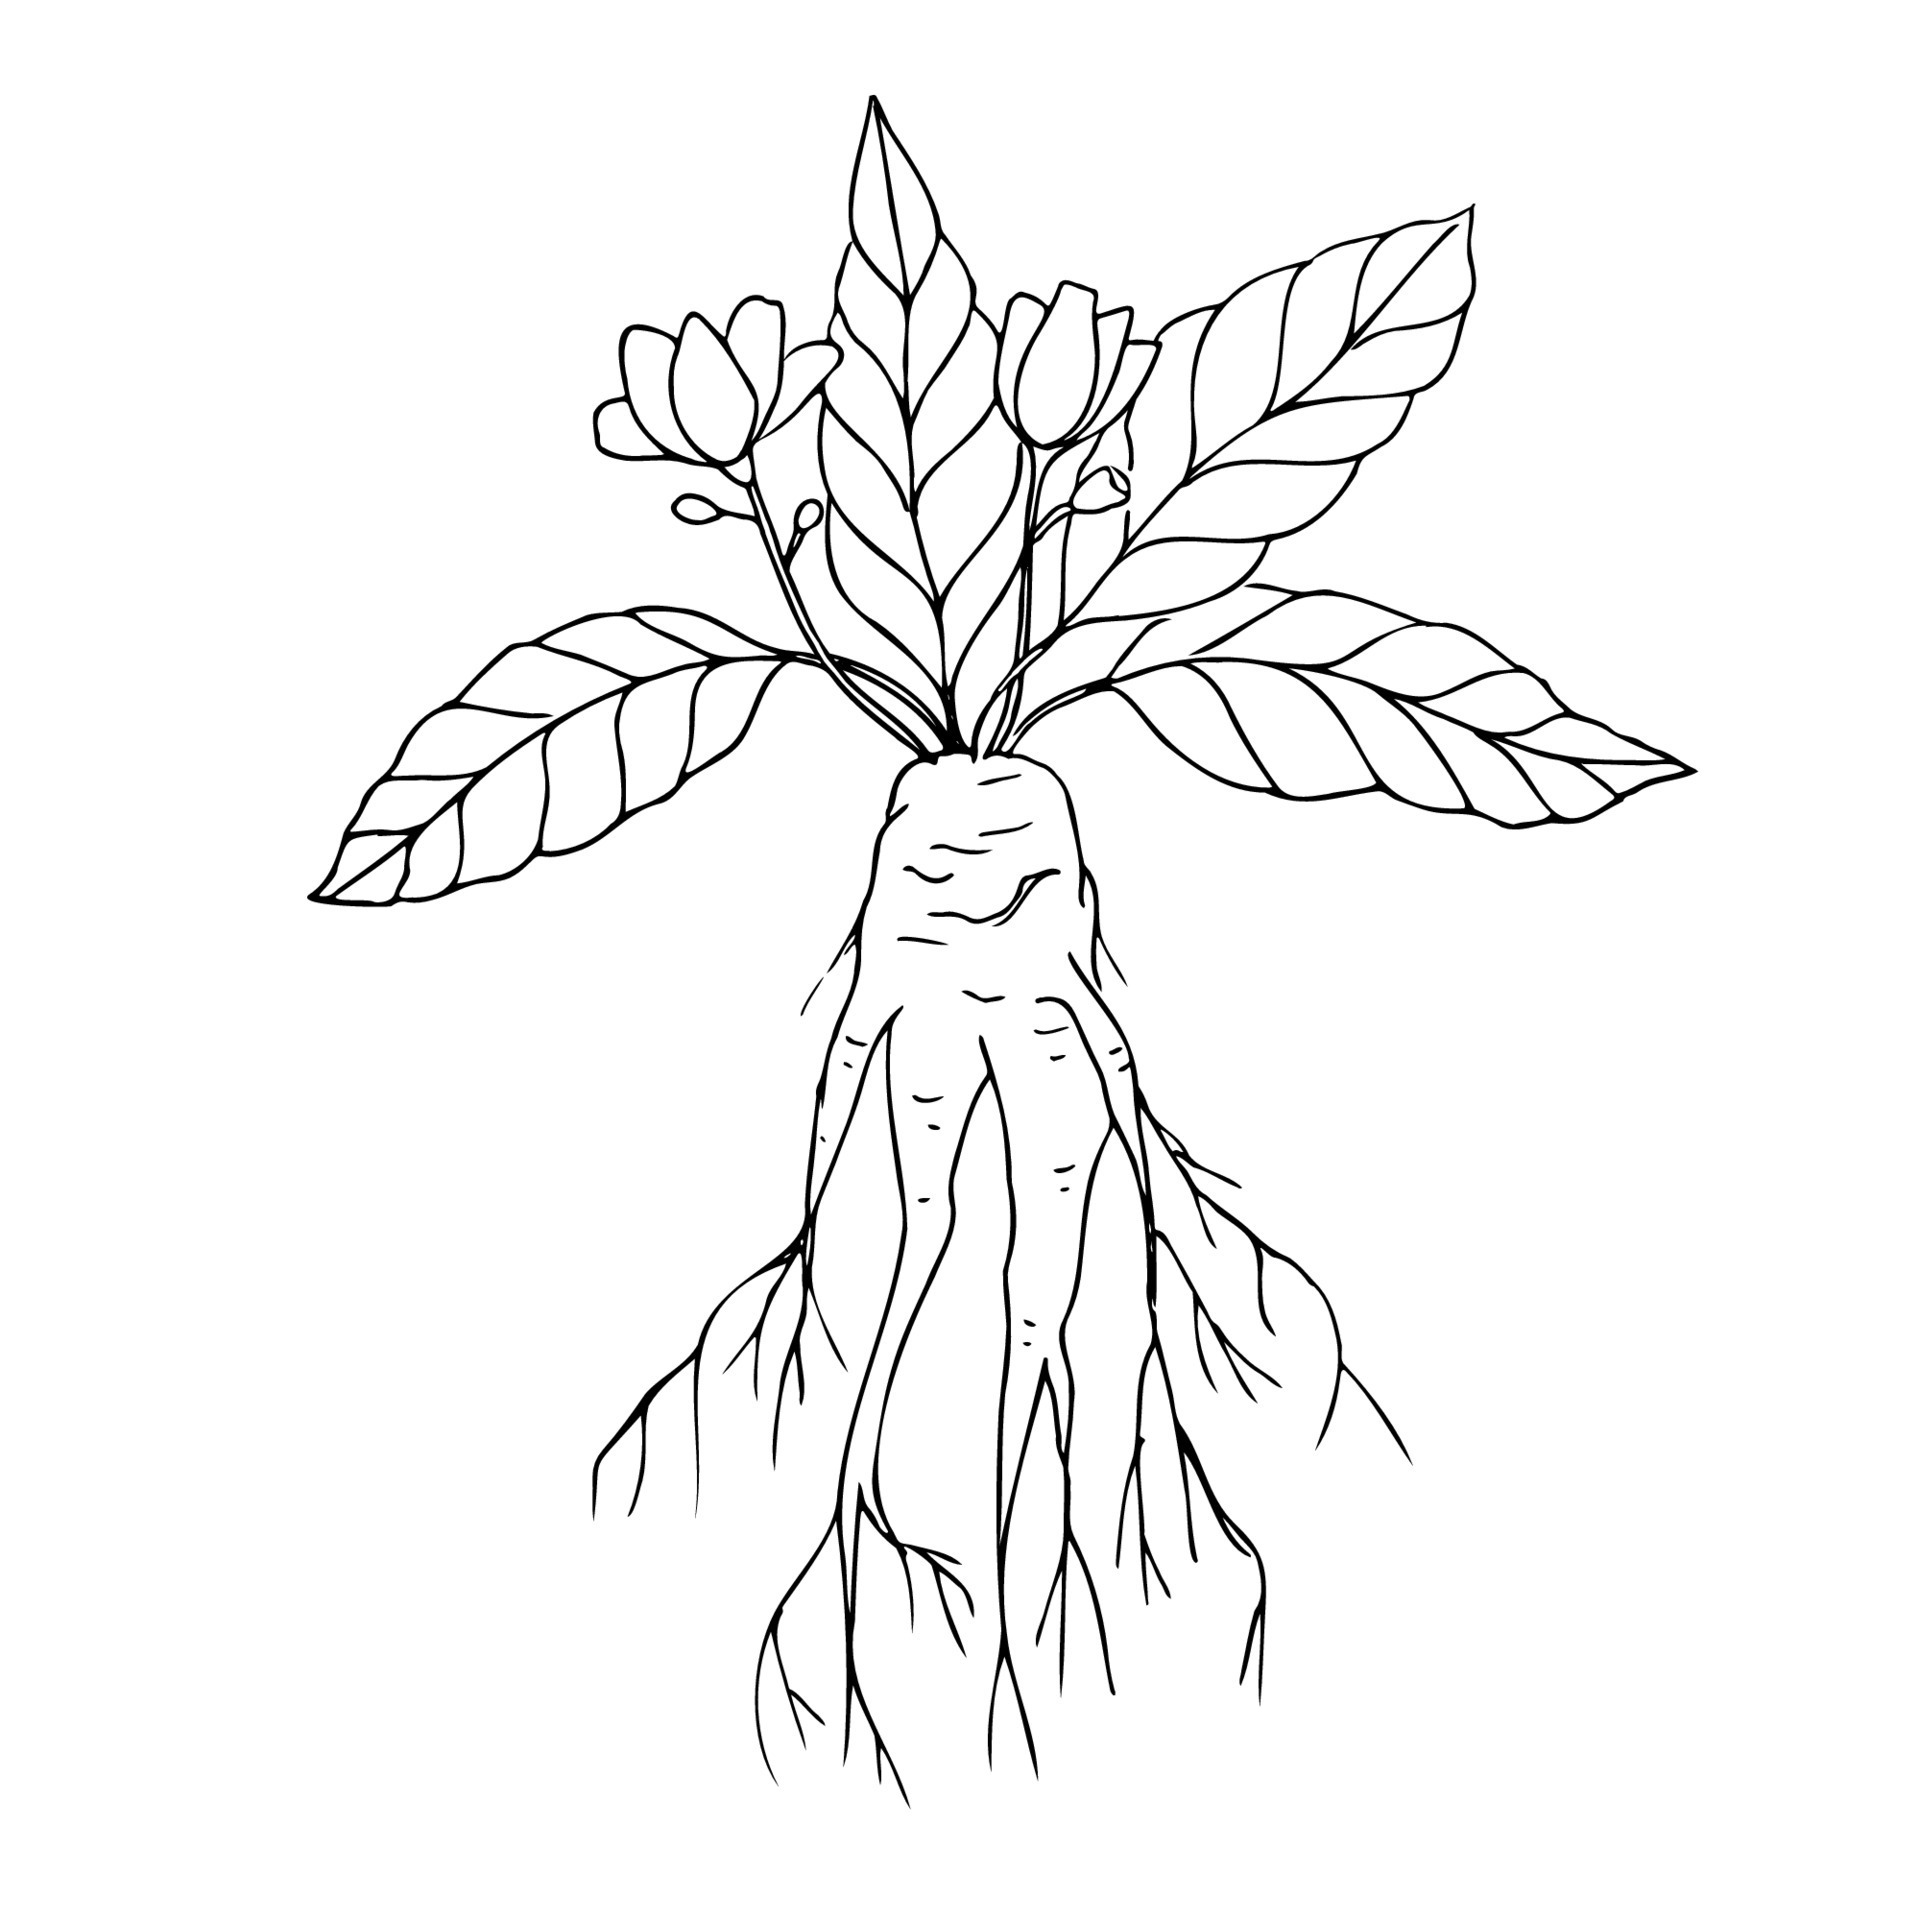 Mandrake Roots Hand Drawn Character Stock Illustration - Download